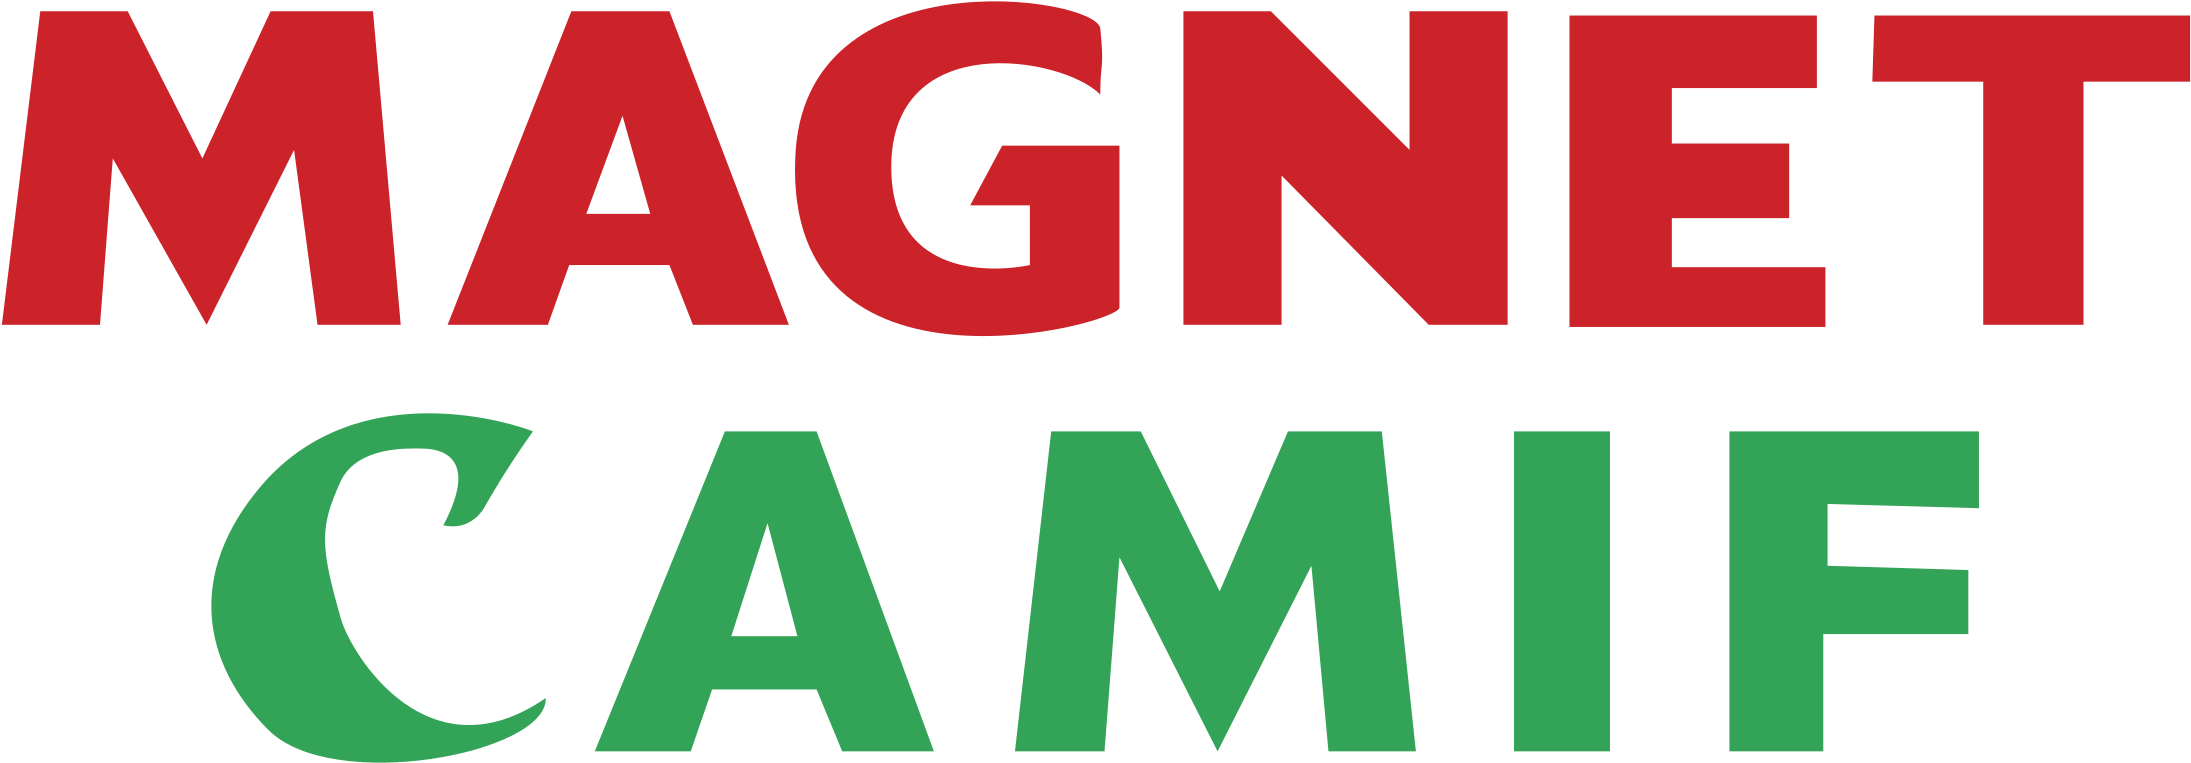 Magnet Camif Logo Png Transparent Svg Vector Freebie - Graphic Design (2400x2400)